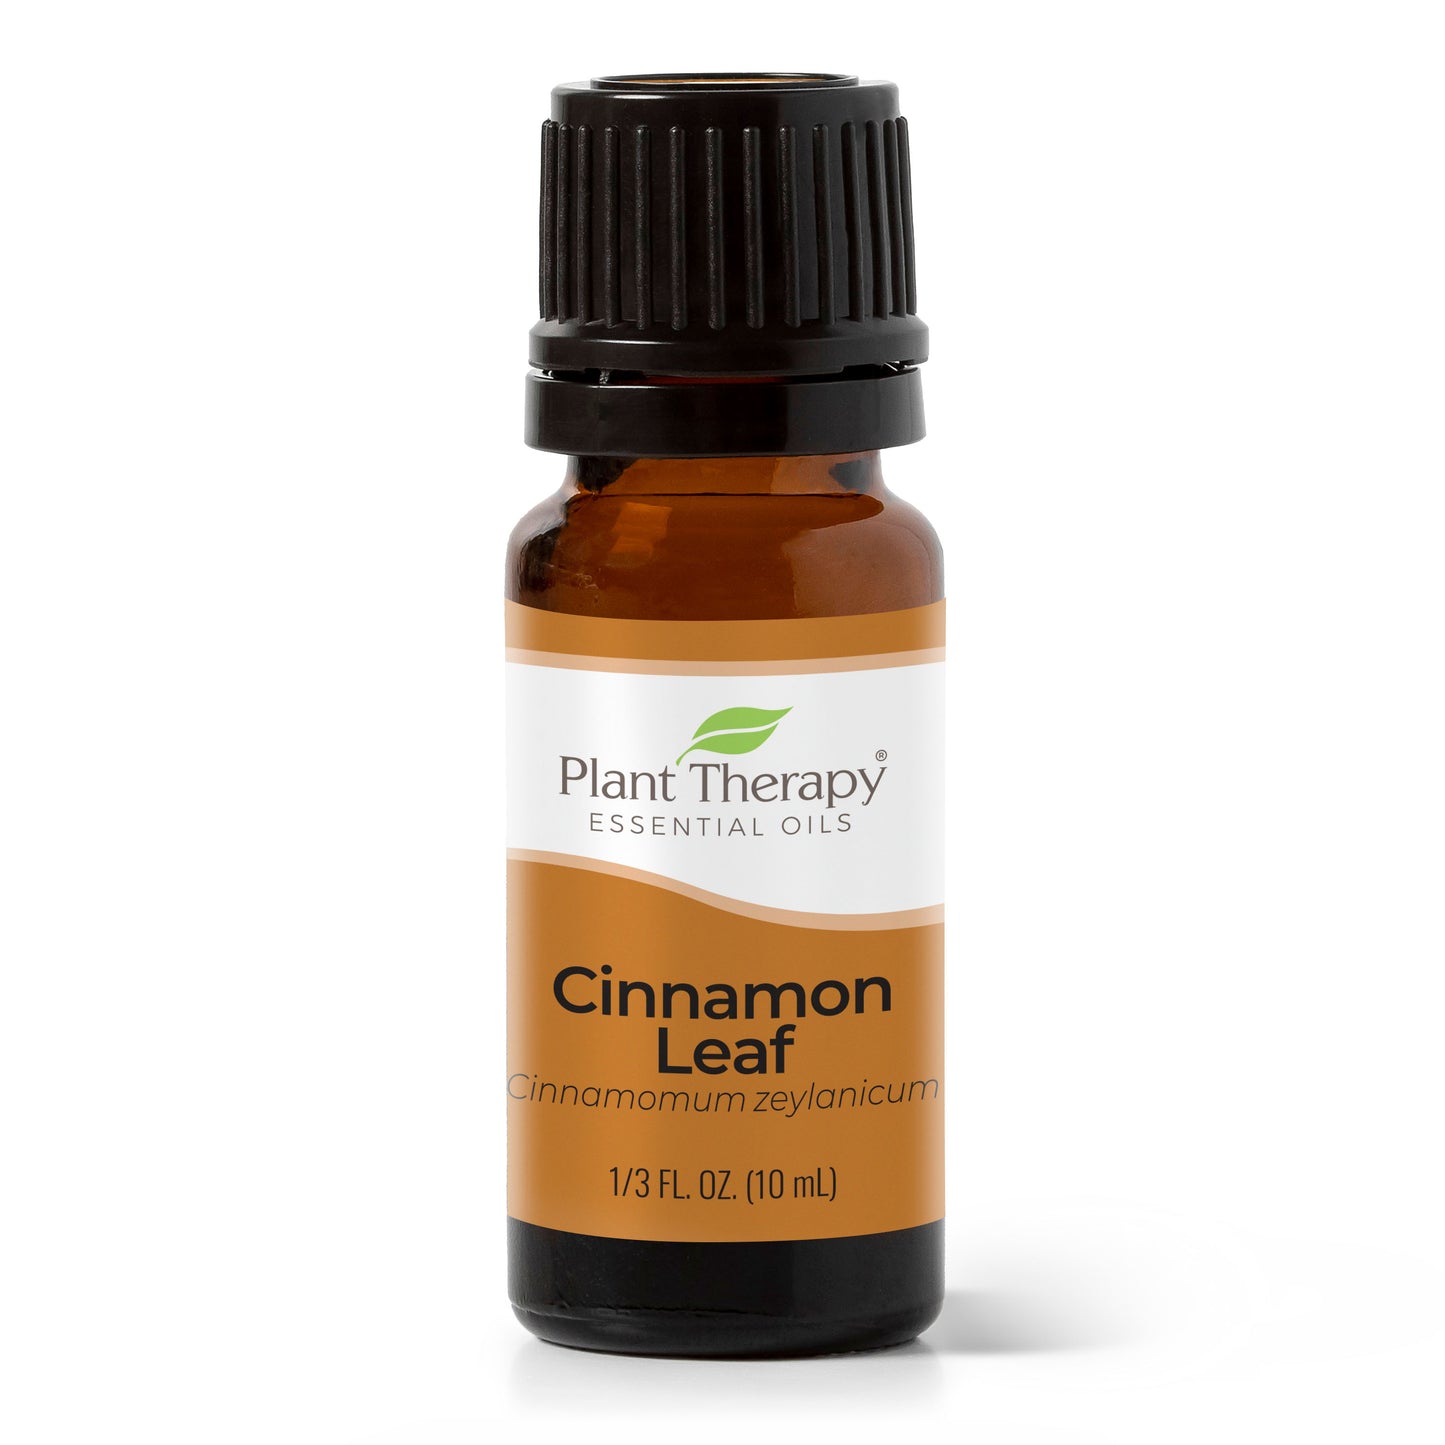 Cinnamon Leaf Essential Oil - Unique Spa Products